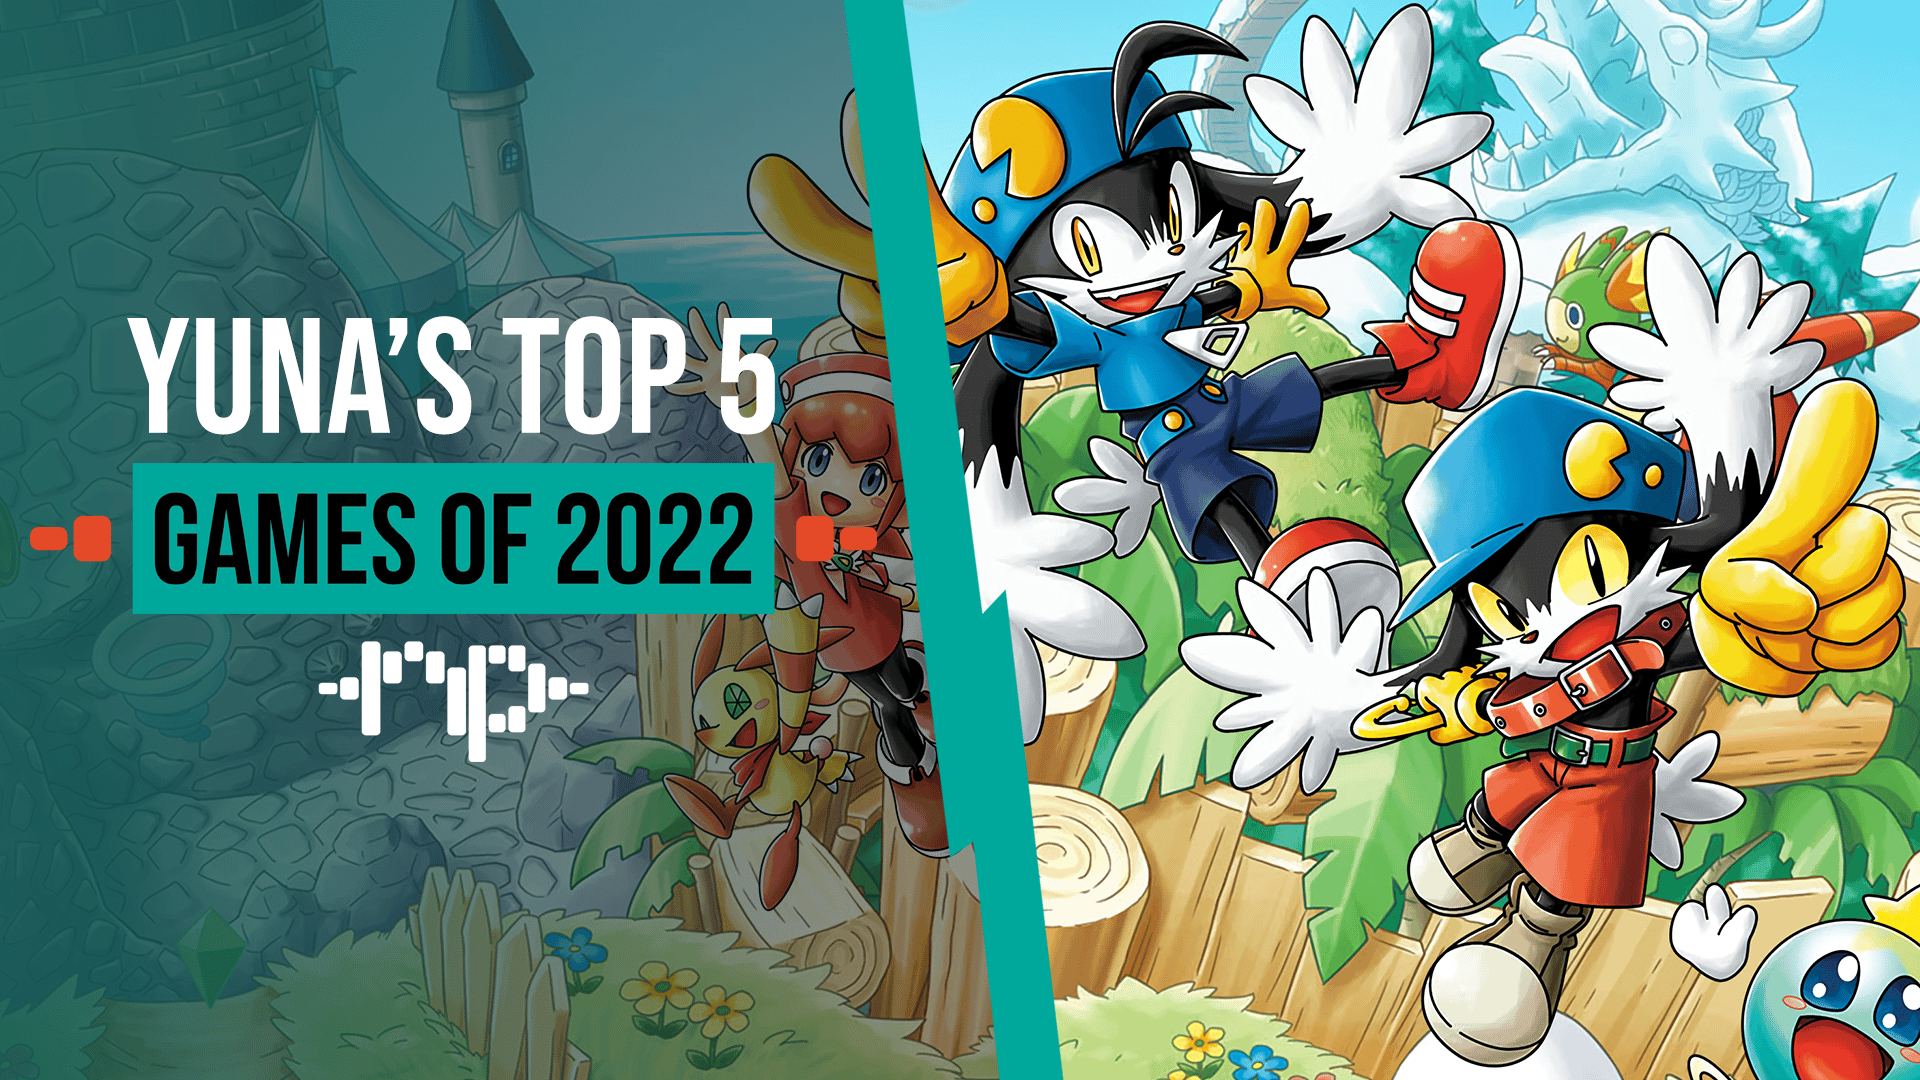 Best Games of 2022: Yuna’s Top 5 Games of 2022